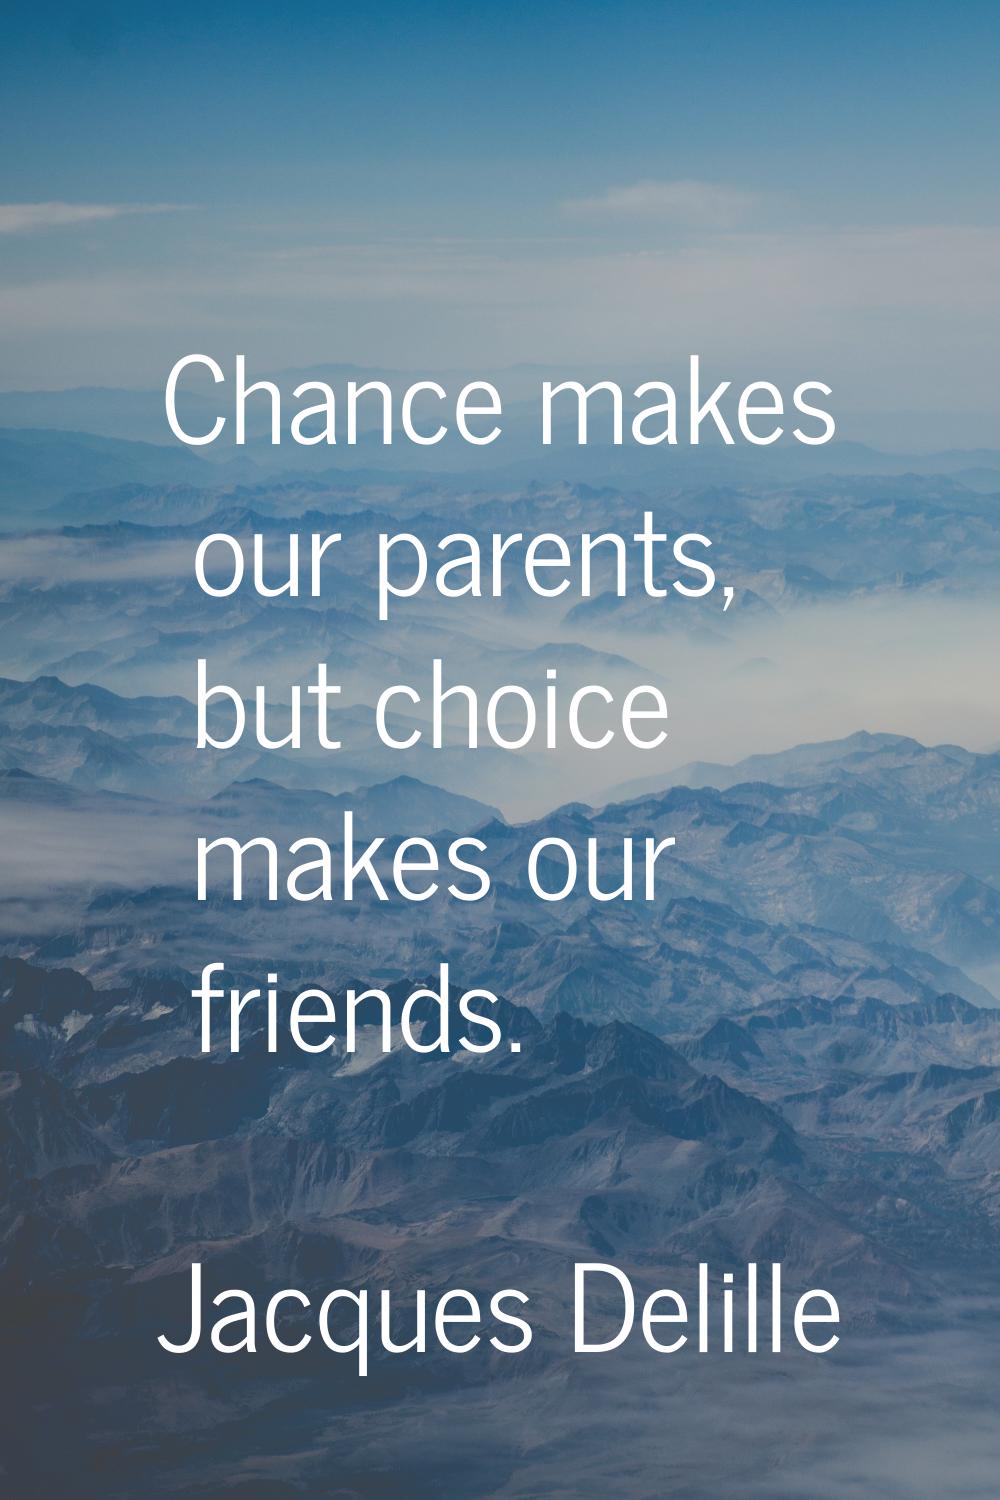 Chance makes our parents, but choice makes our friends.